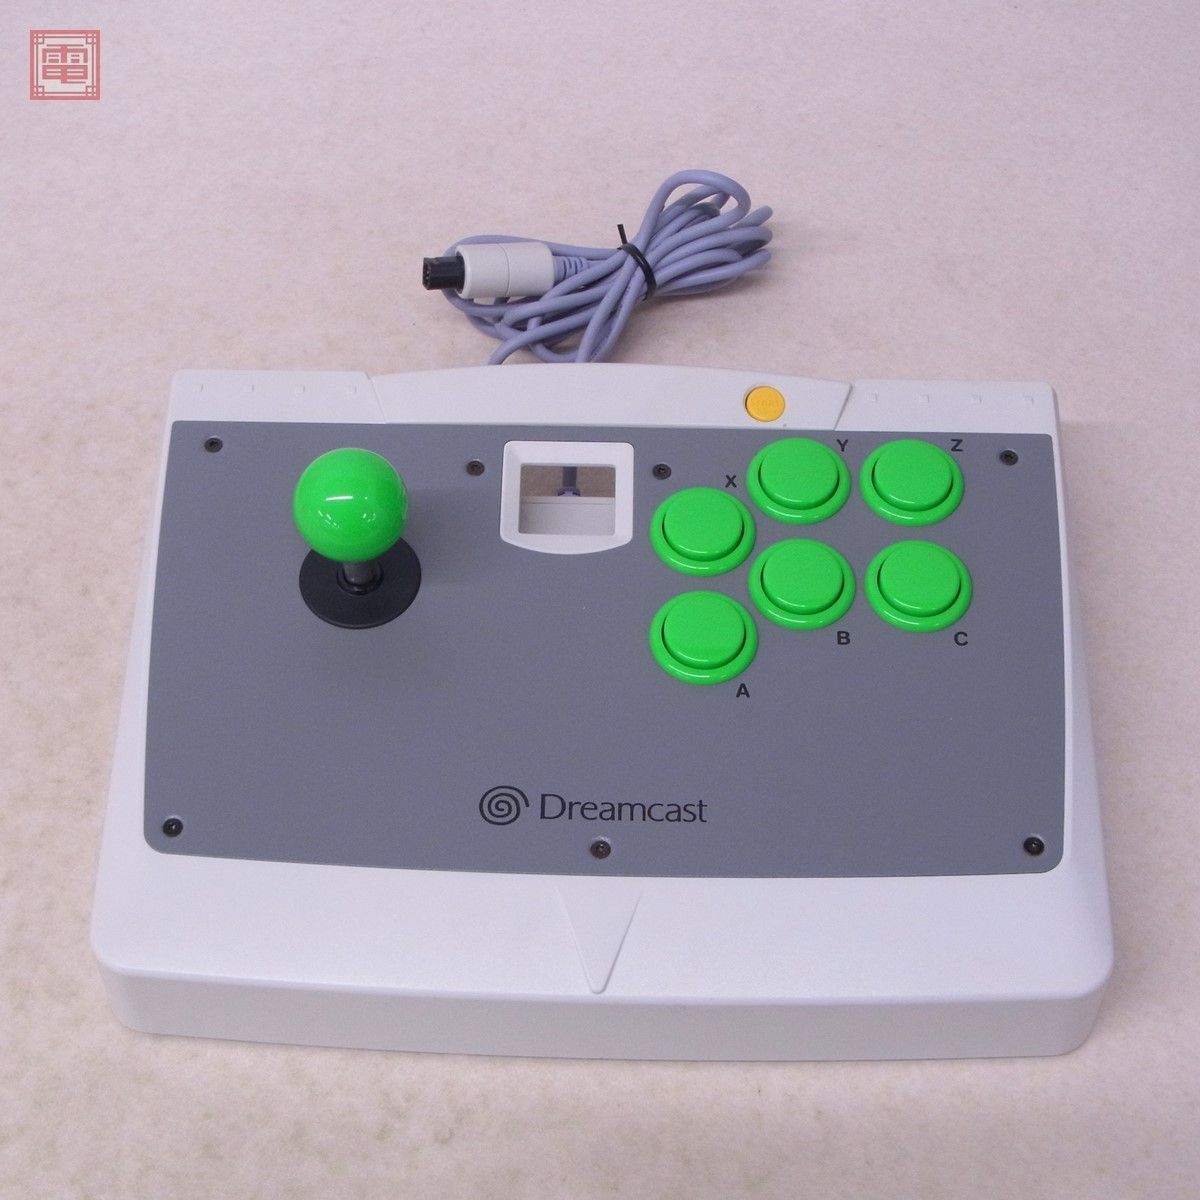  operation goods DC Dreamcast arcade stick HKT-7300 Dreamcastdoli Cath arcade controller SEGA box attaching with defect [20